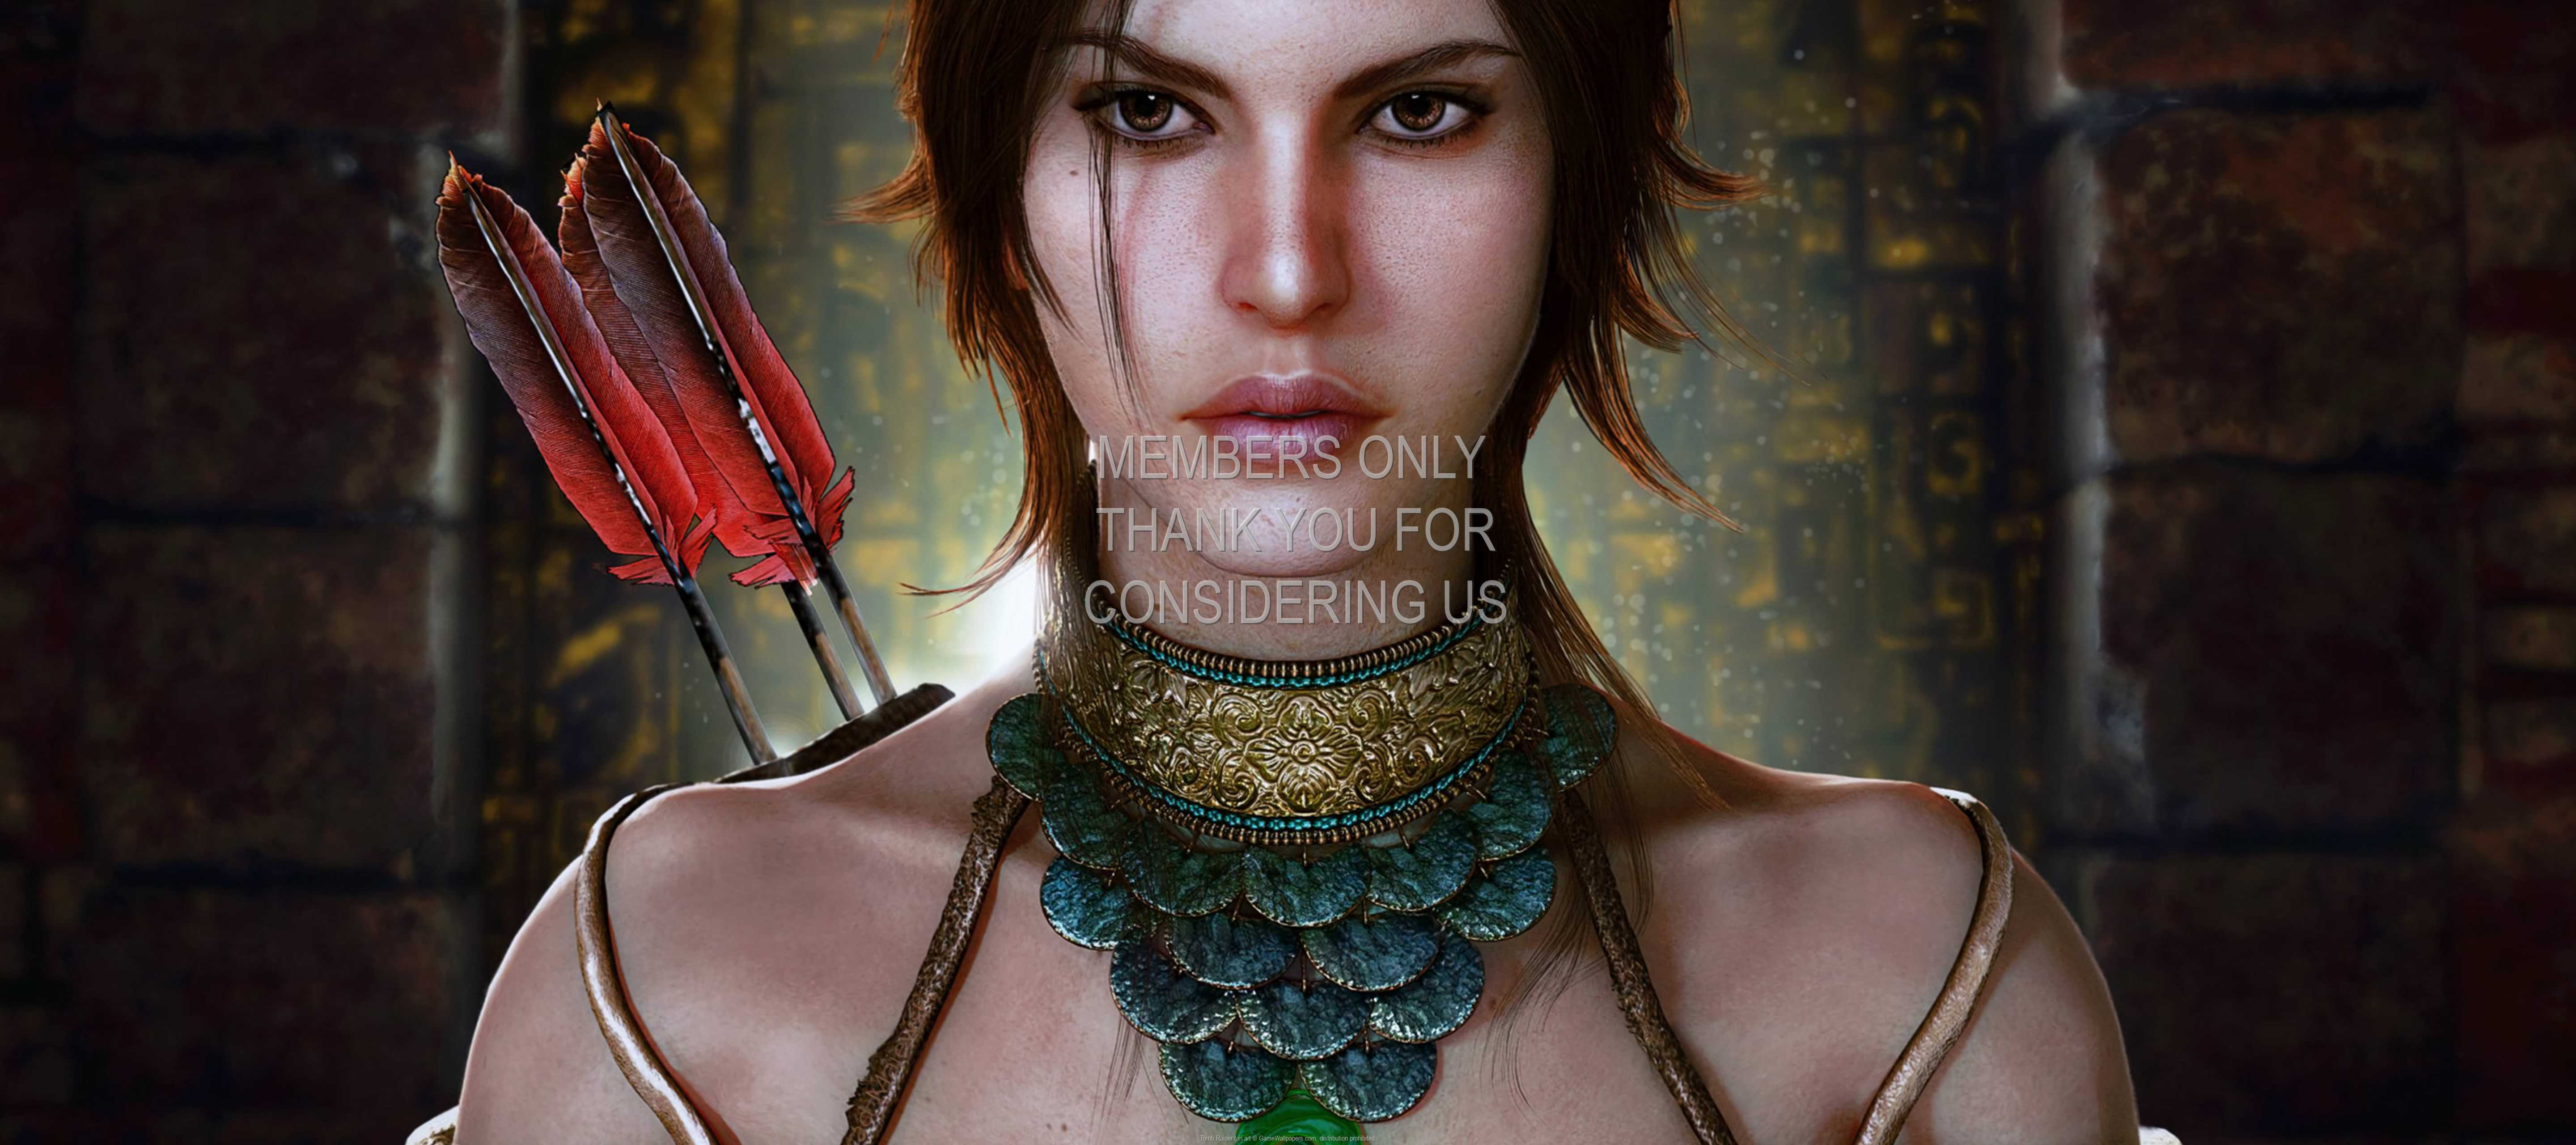 Tomb Raider fan art 1440p%20Horizontal Mobile wallpaper or background 10